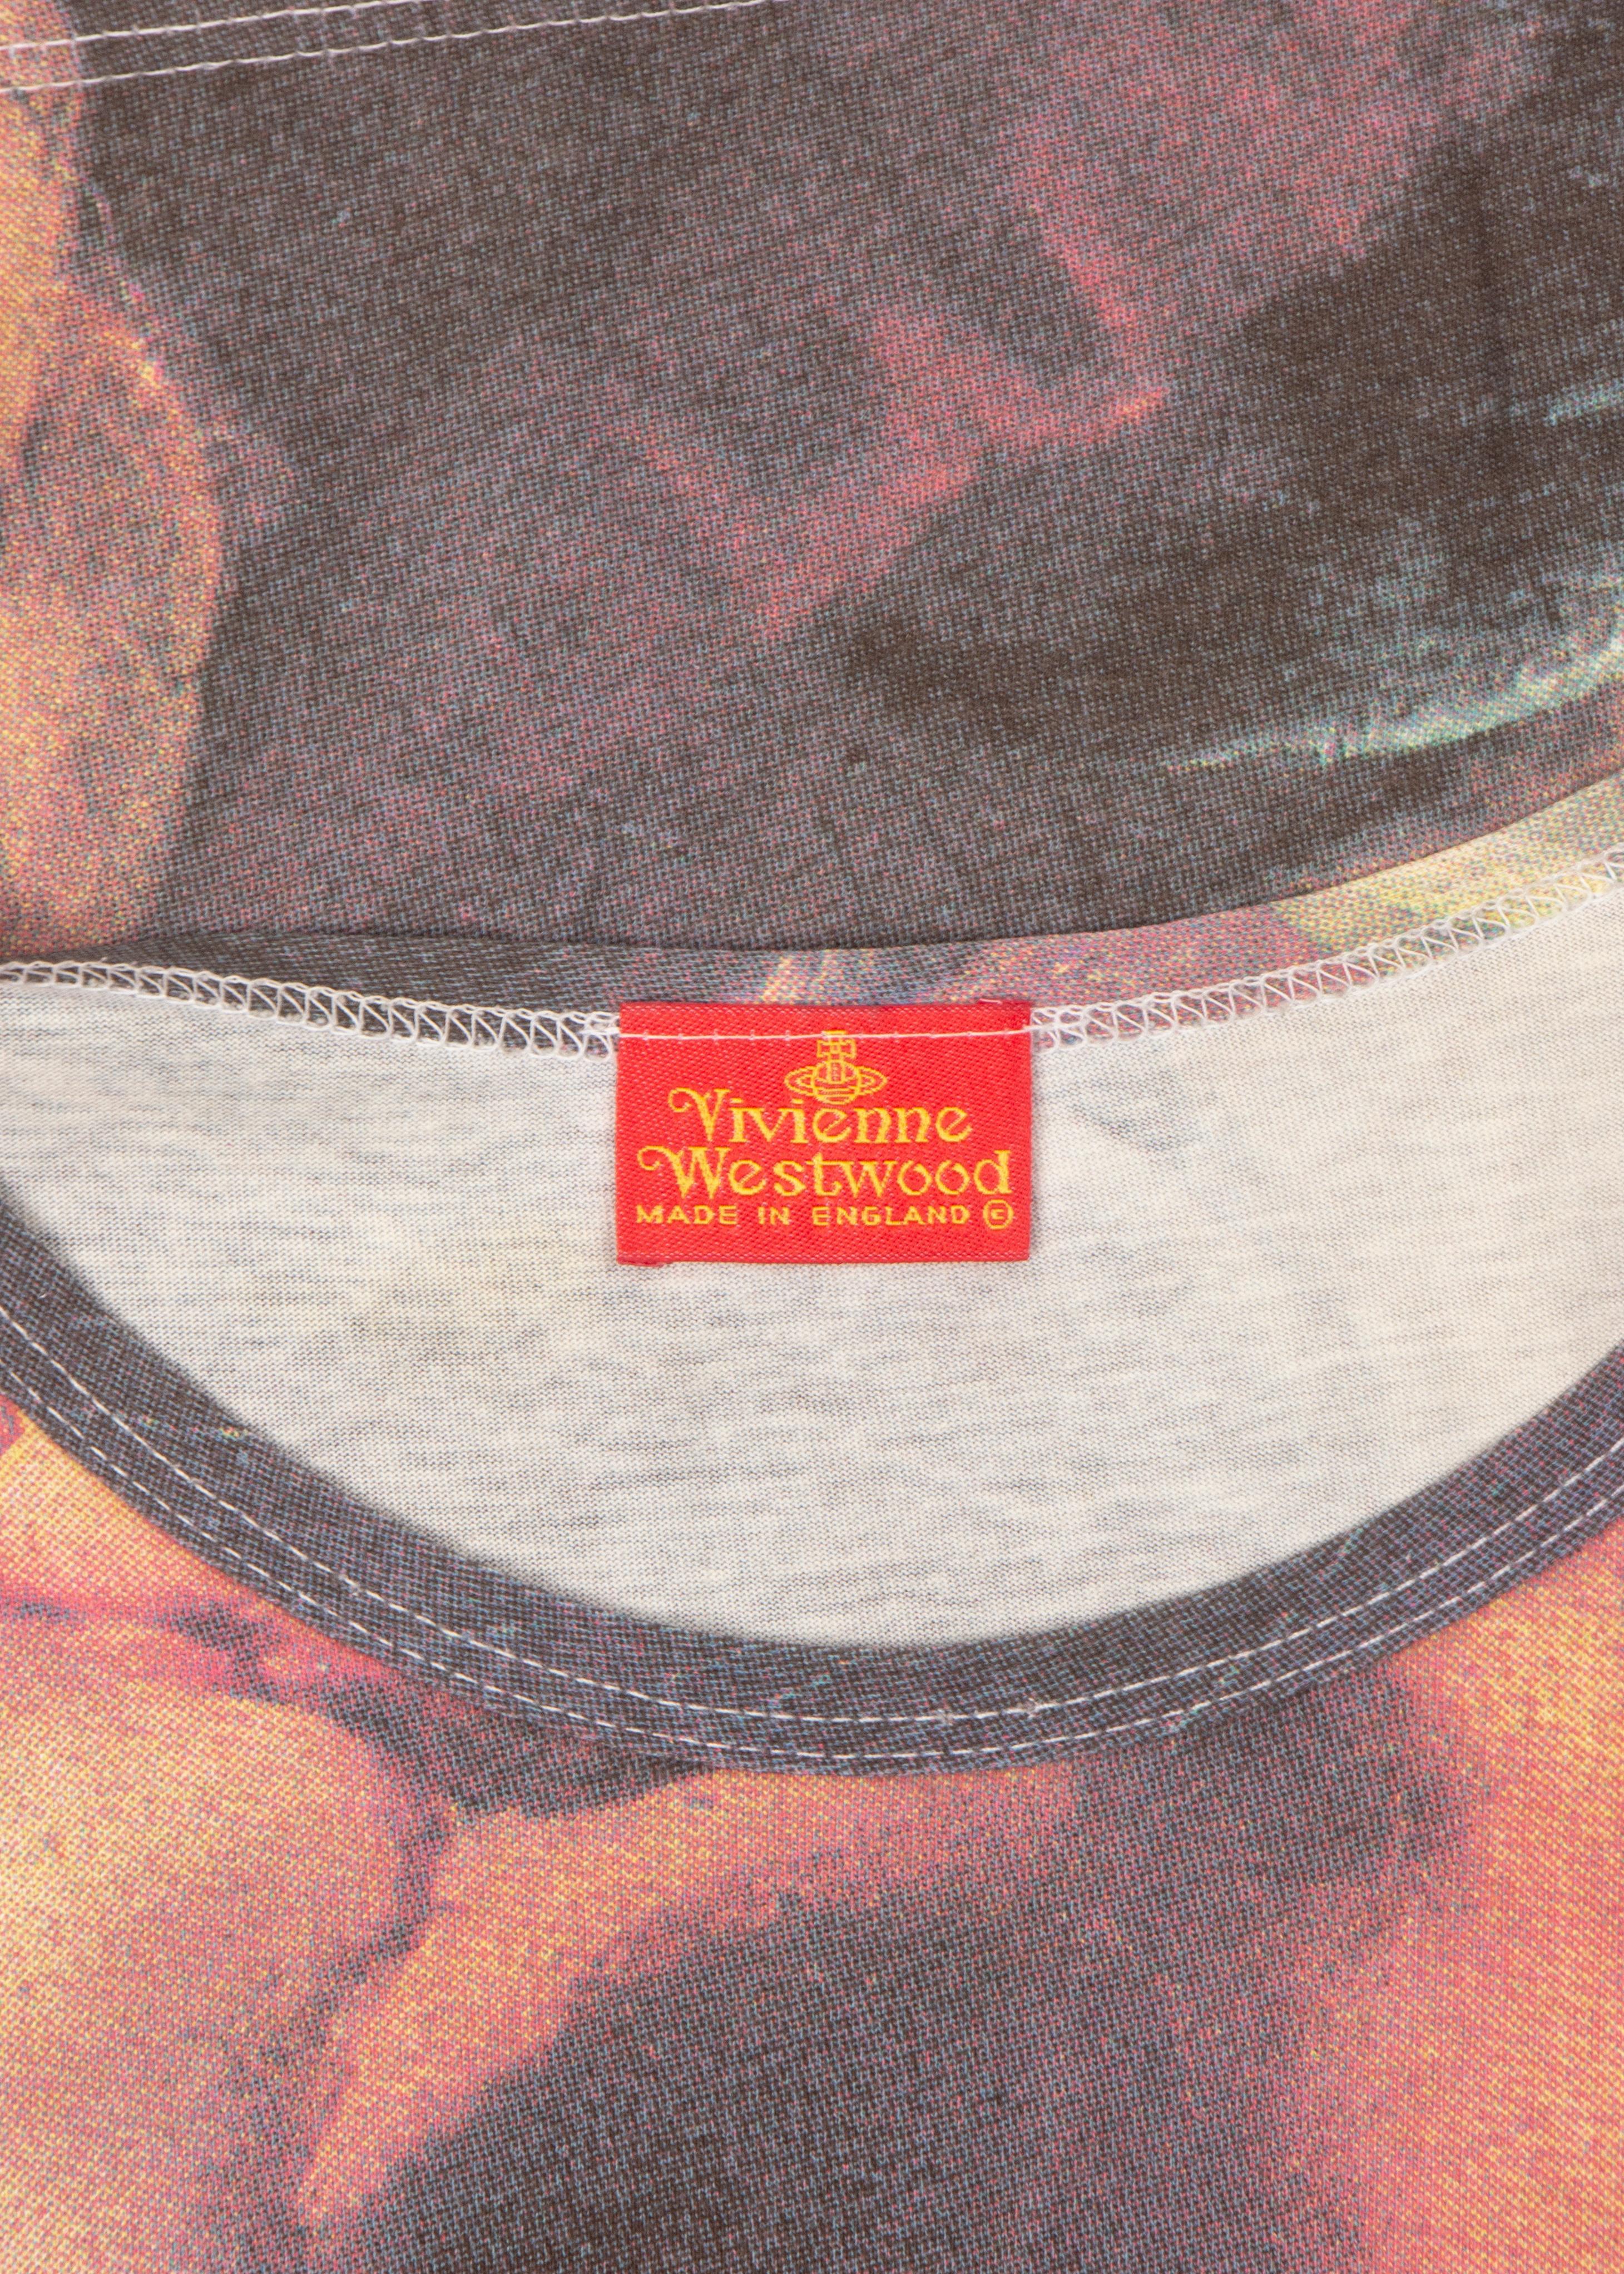 Vivienne Westwood 'Grand Hotel' Francois Boucher Hercules t-shirt, ss 1993 For Sale 1